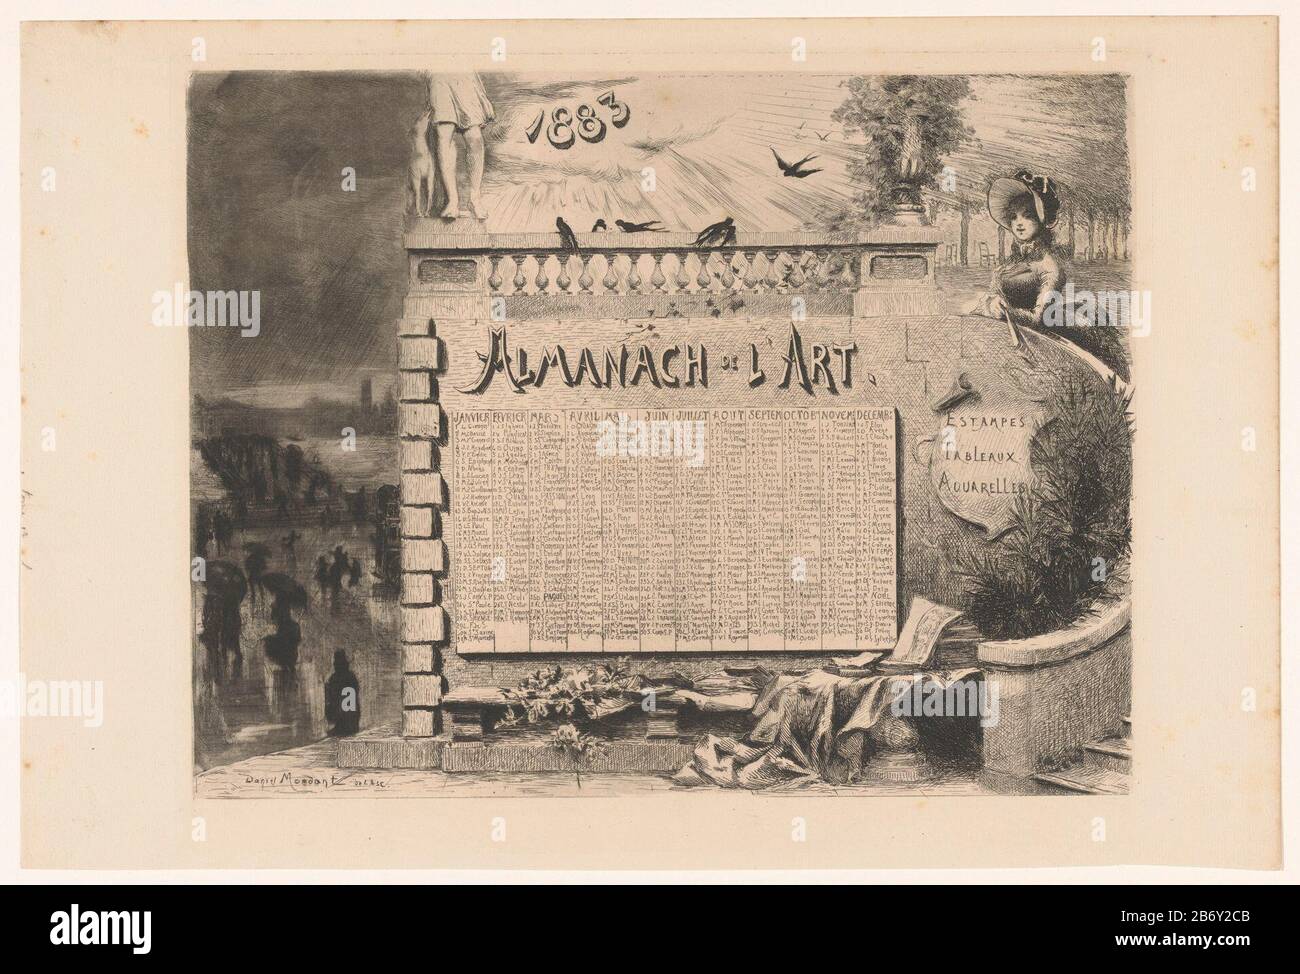 Misverstand ambulance Madeliefje Kalender voor het jaar 1883 Almanach de l'art (titel op object) Calendar on  the side of a terrace, next to a kick in a park. On the balustrade is an  image of